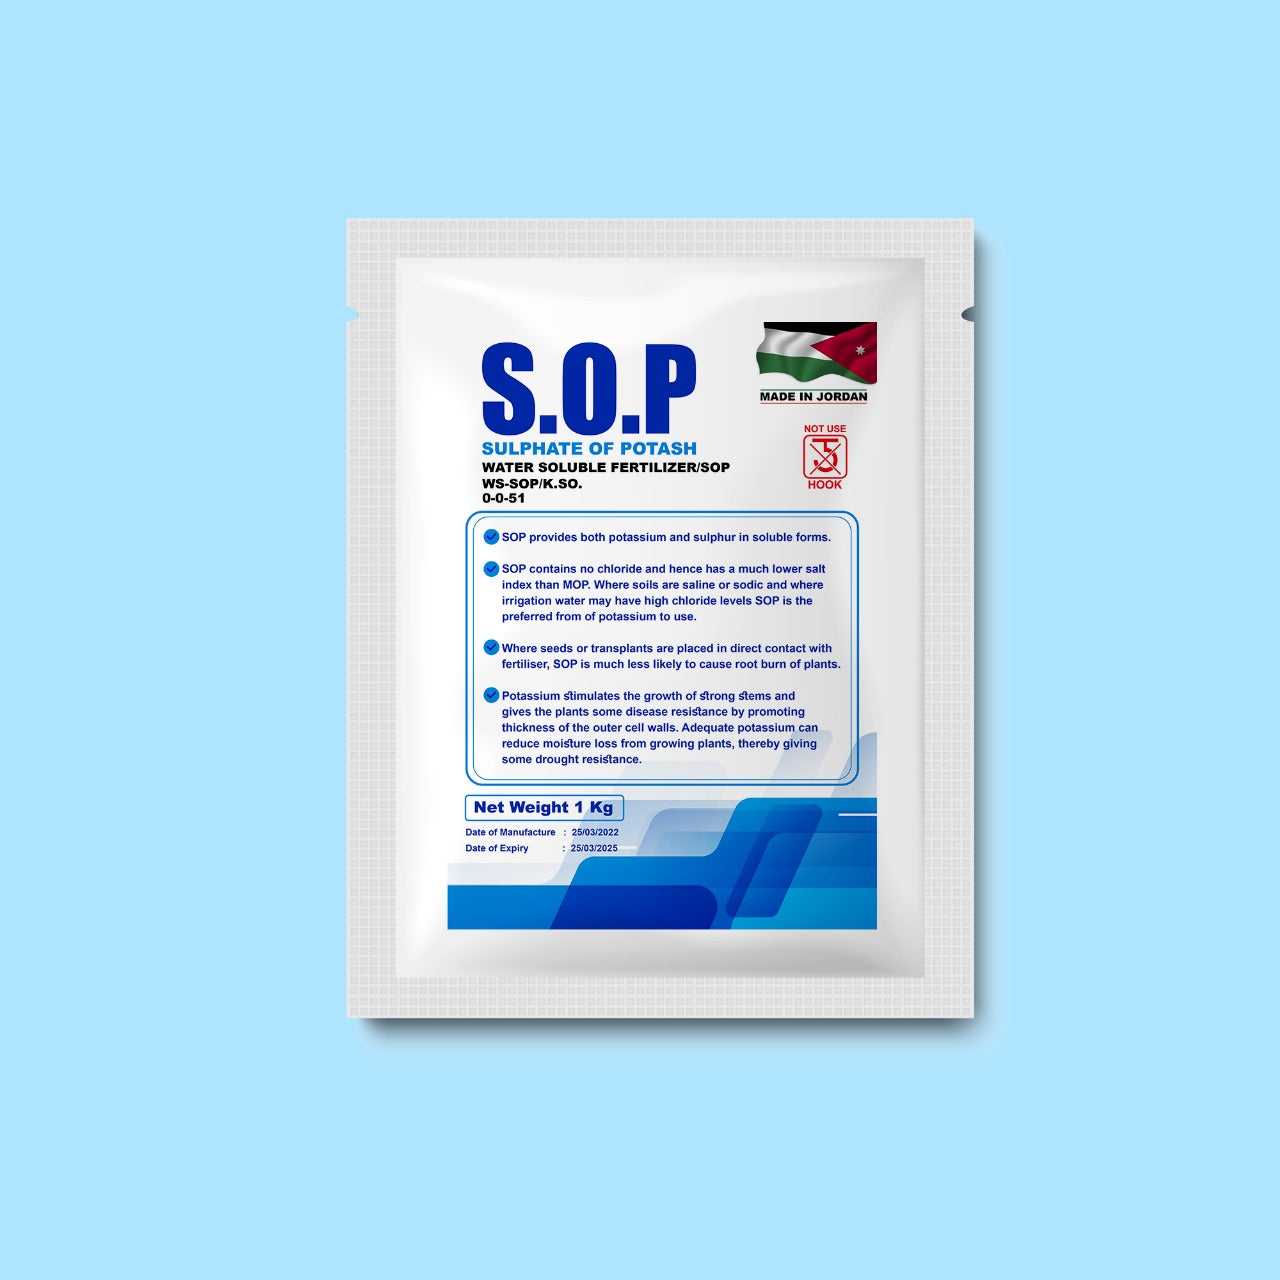 S.O.P Potasium Sulphate MADE IN JORDAN - 1 kg pack